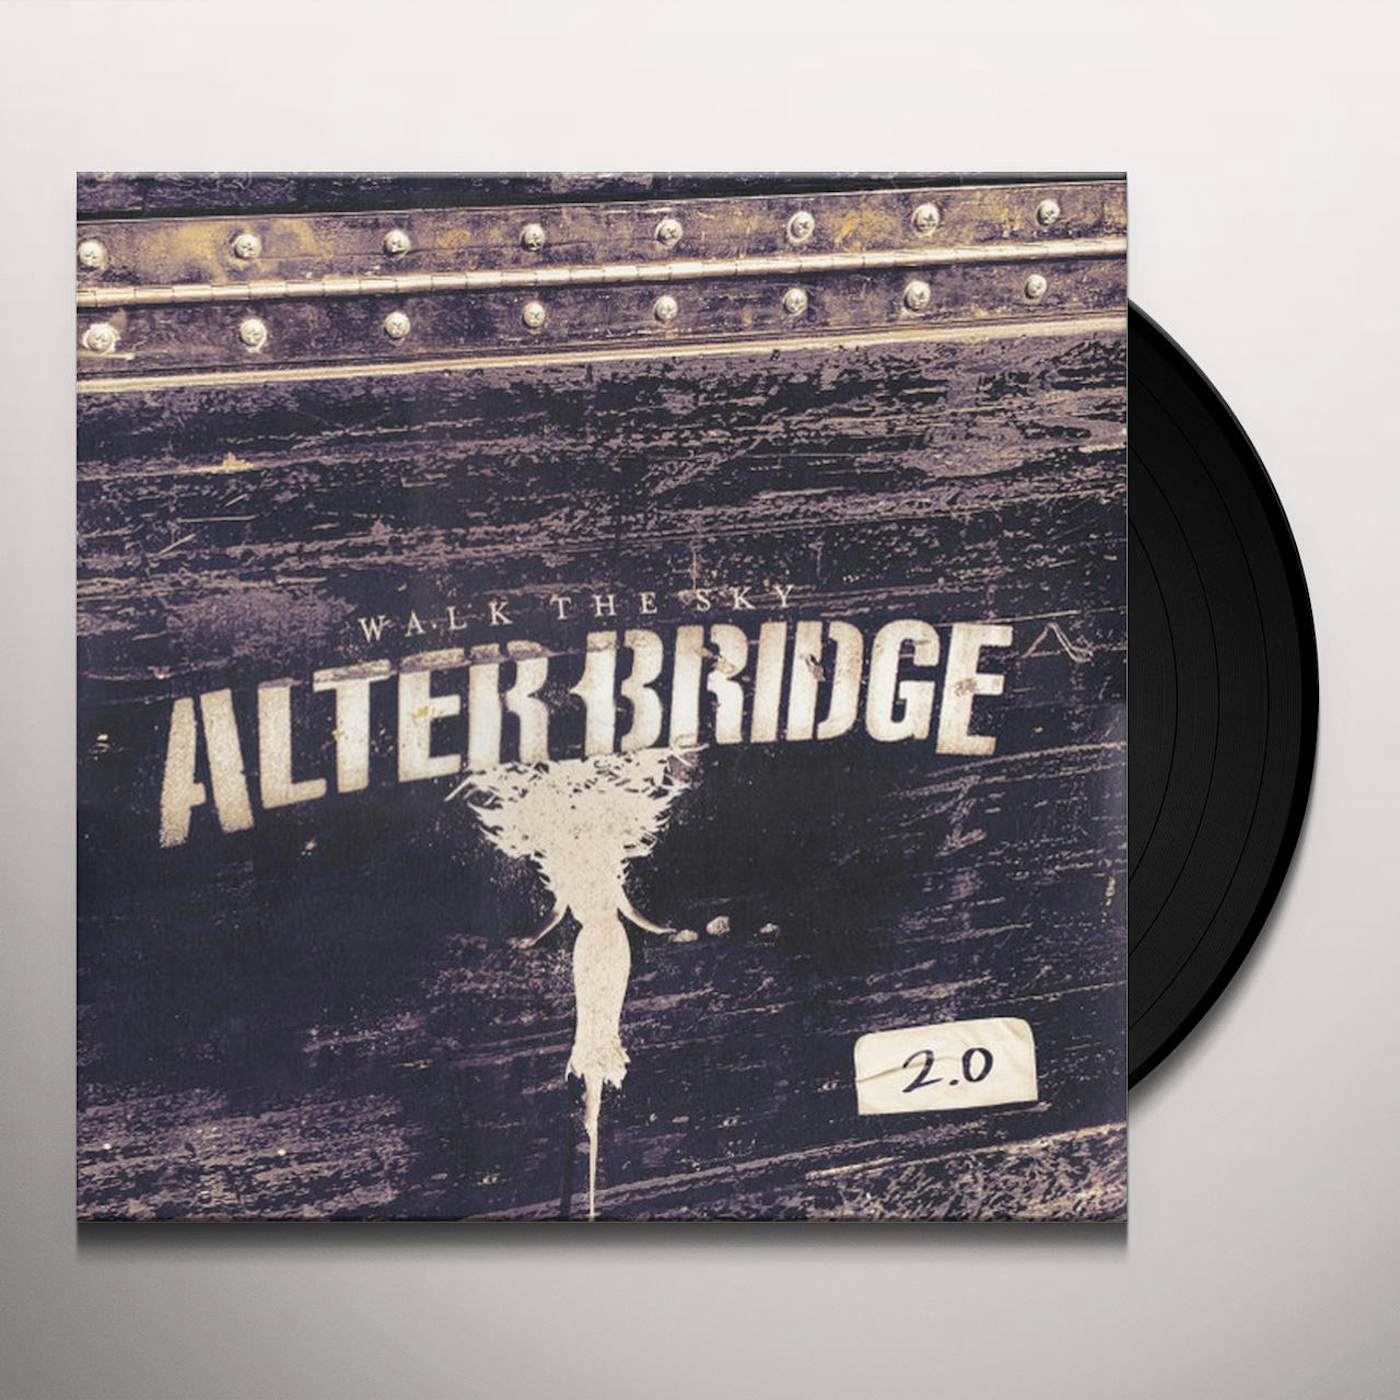 Alter Bridge WALK THE SKY 2.0 (CREAM VINYL) Vinyl Record